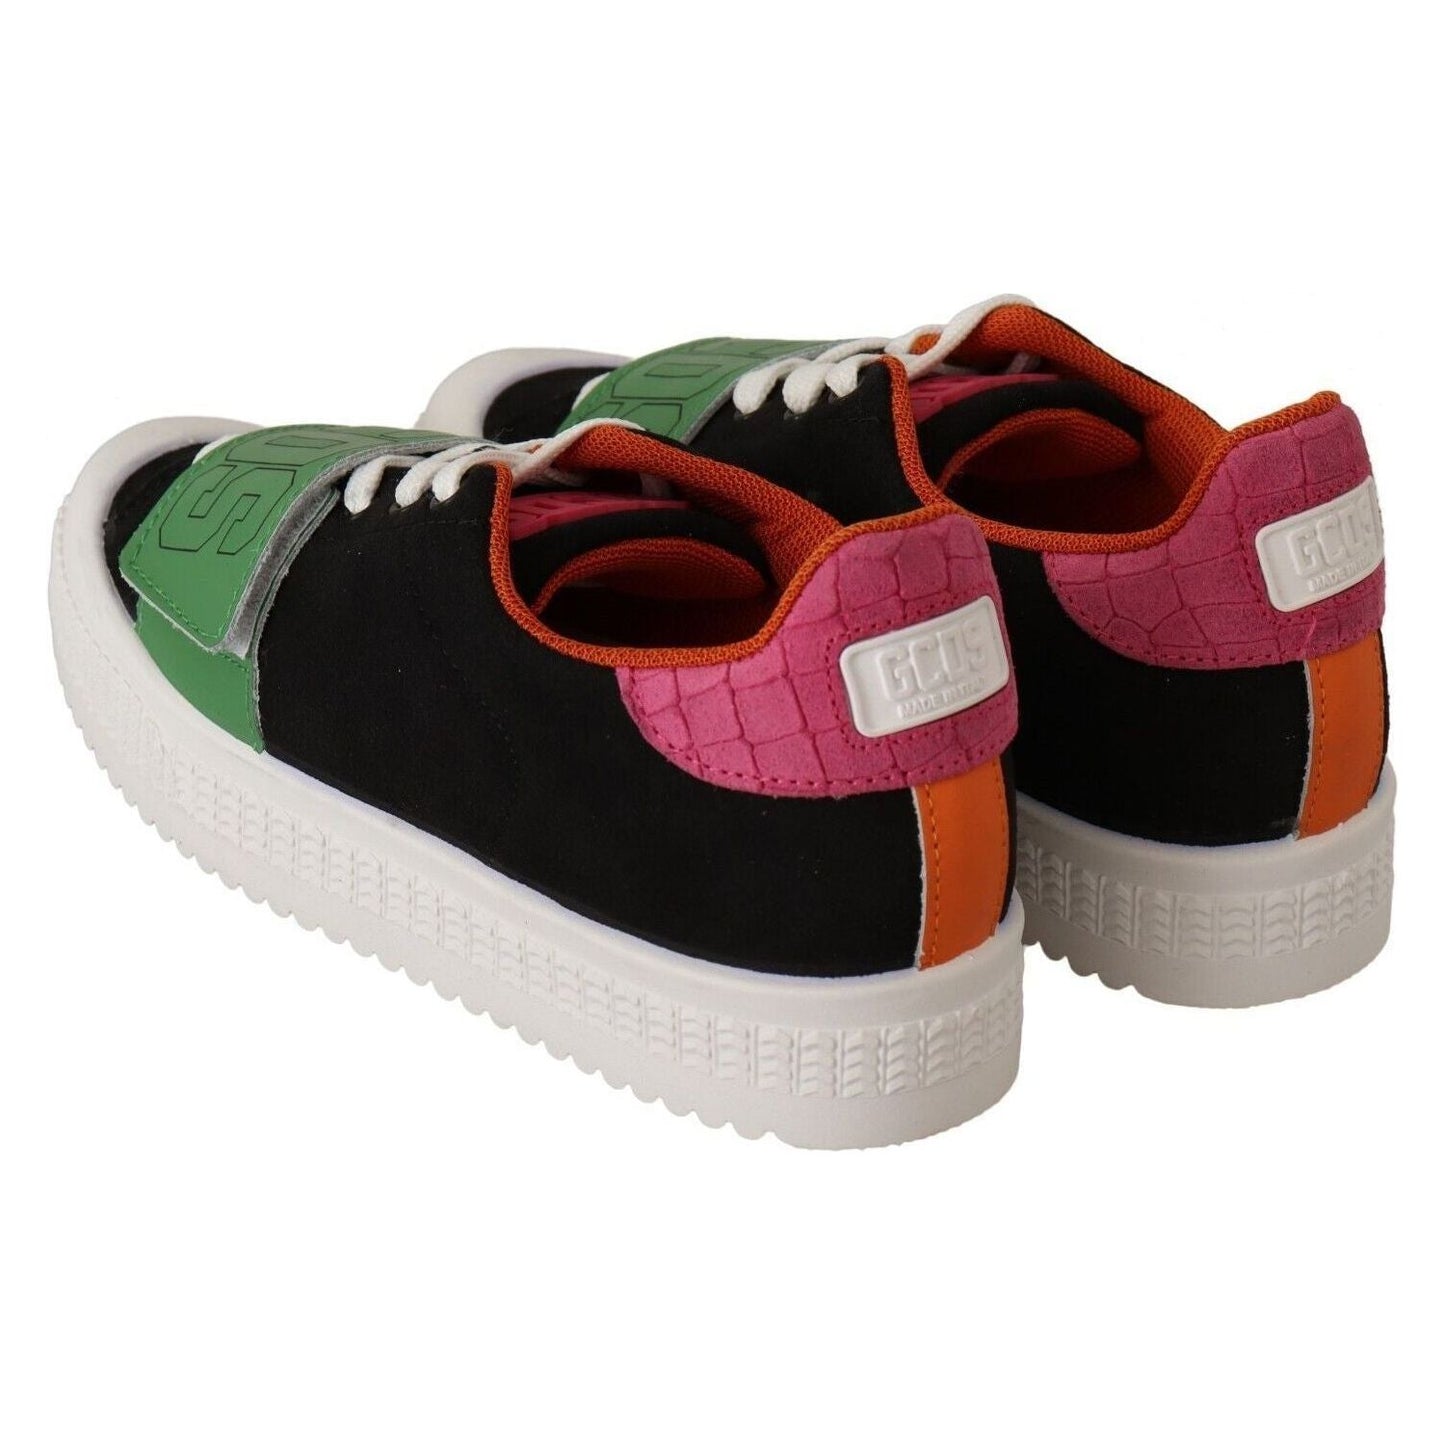 GCDSStylish Multicolor Low Top Lace-Up SneakersMcRichard Designer Brands£219.00